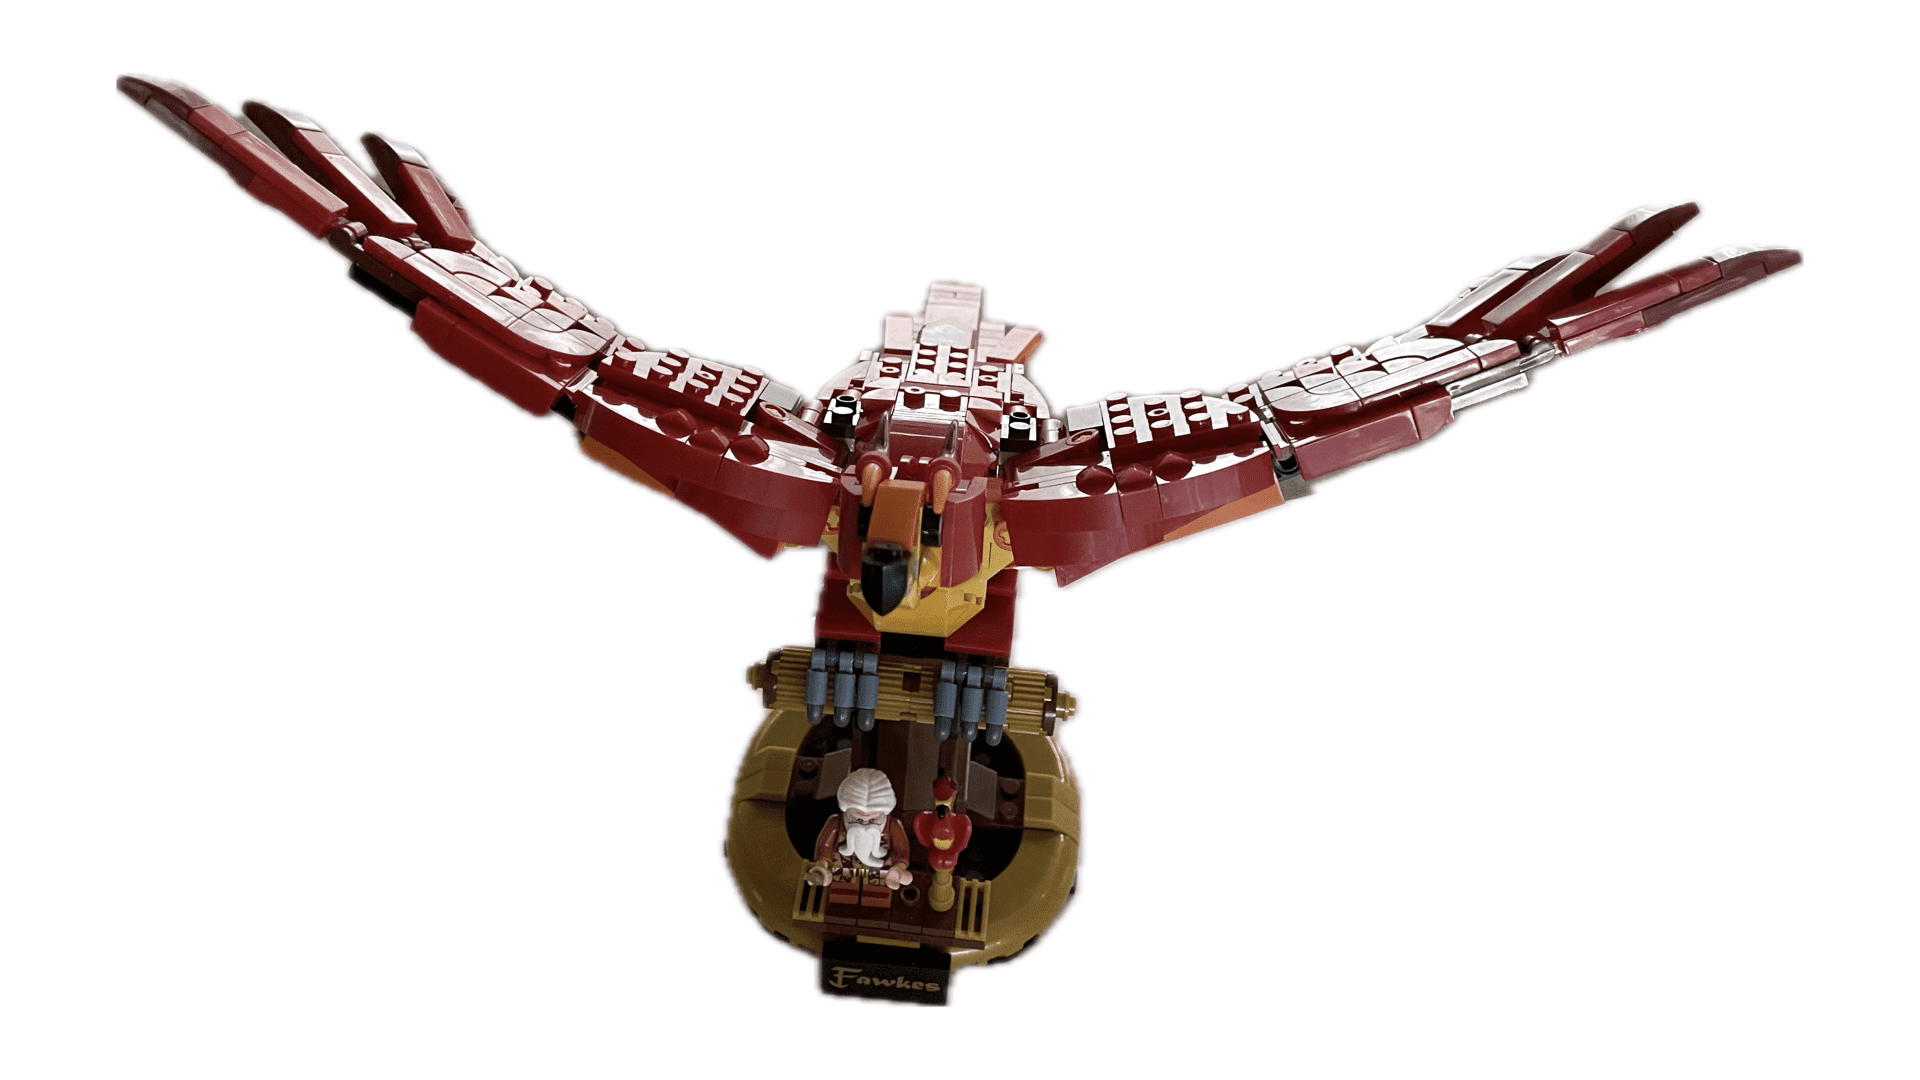 Rotes Lego-Phönix-Modell